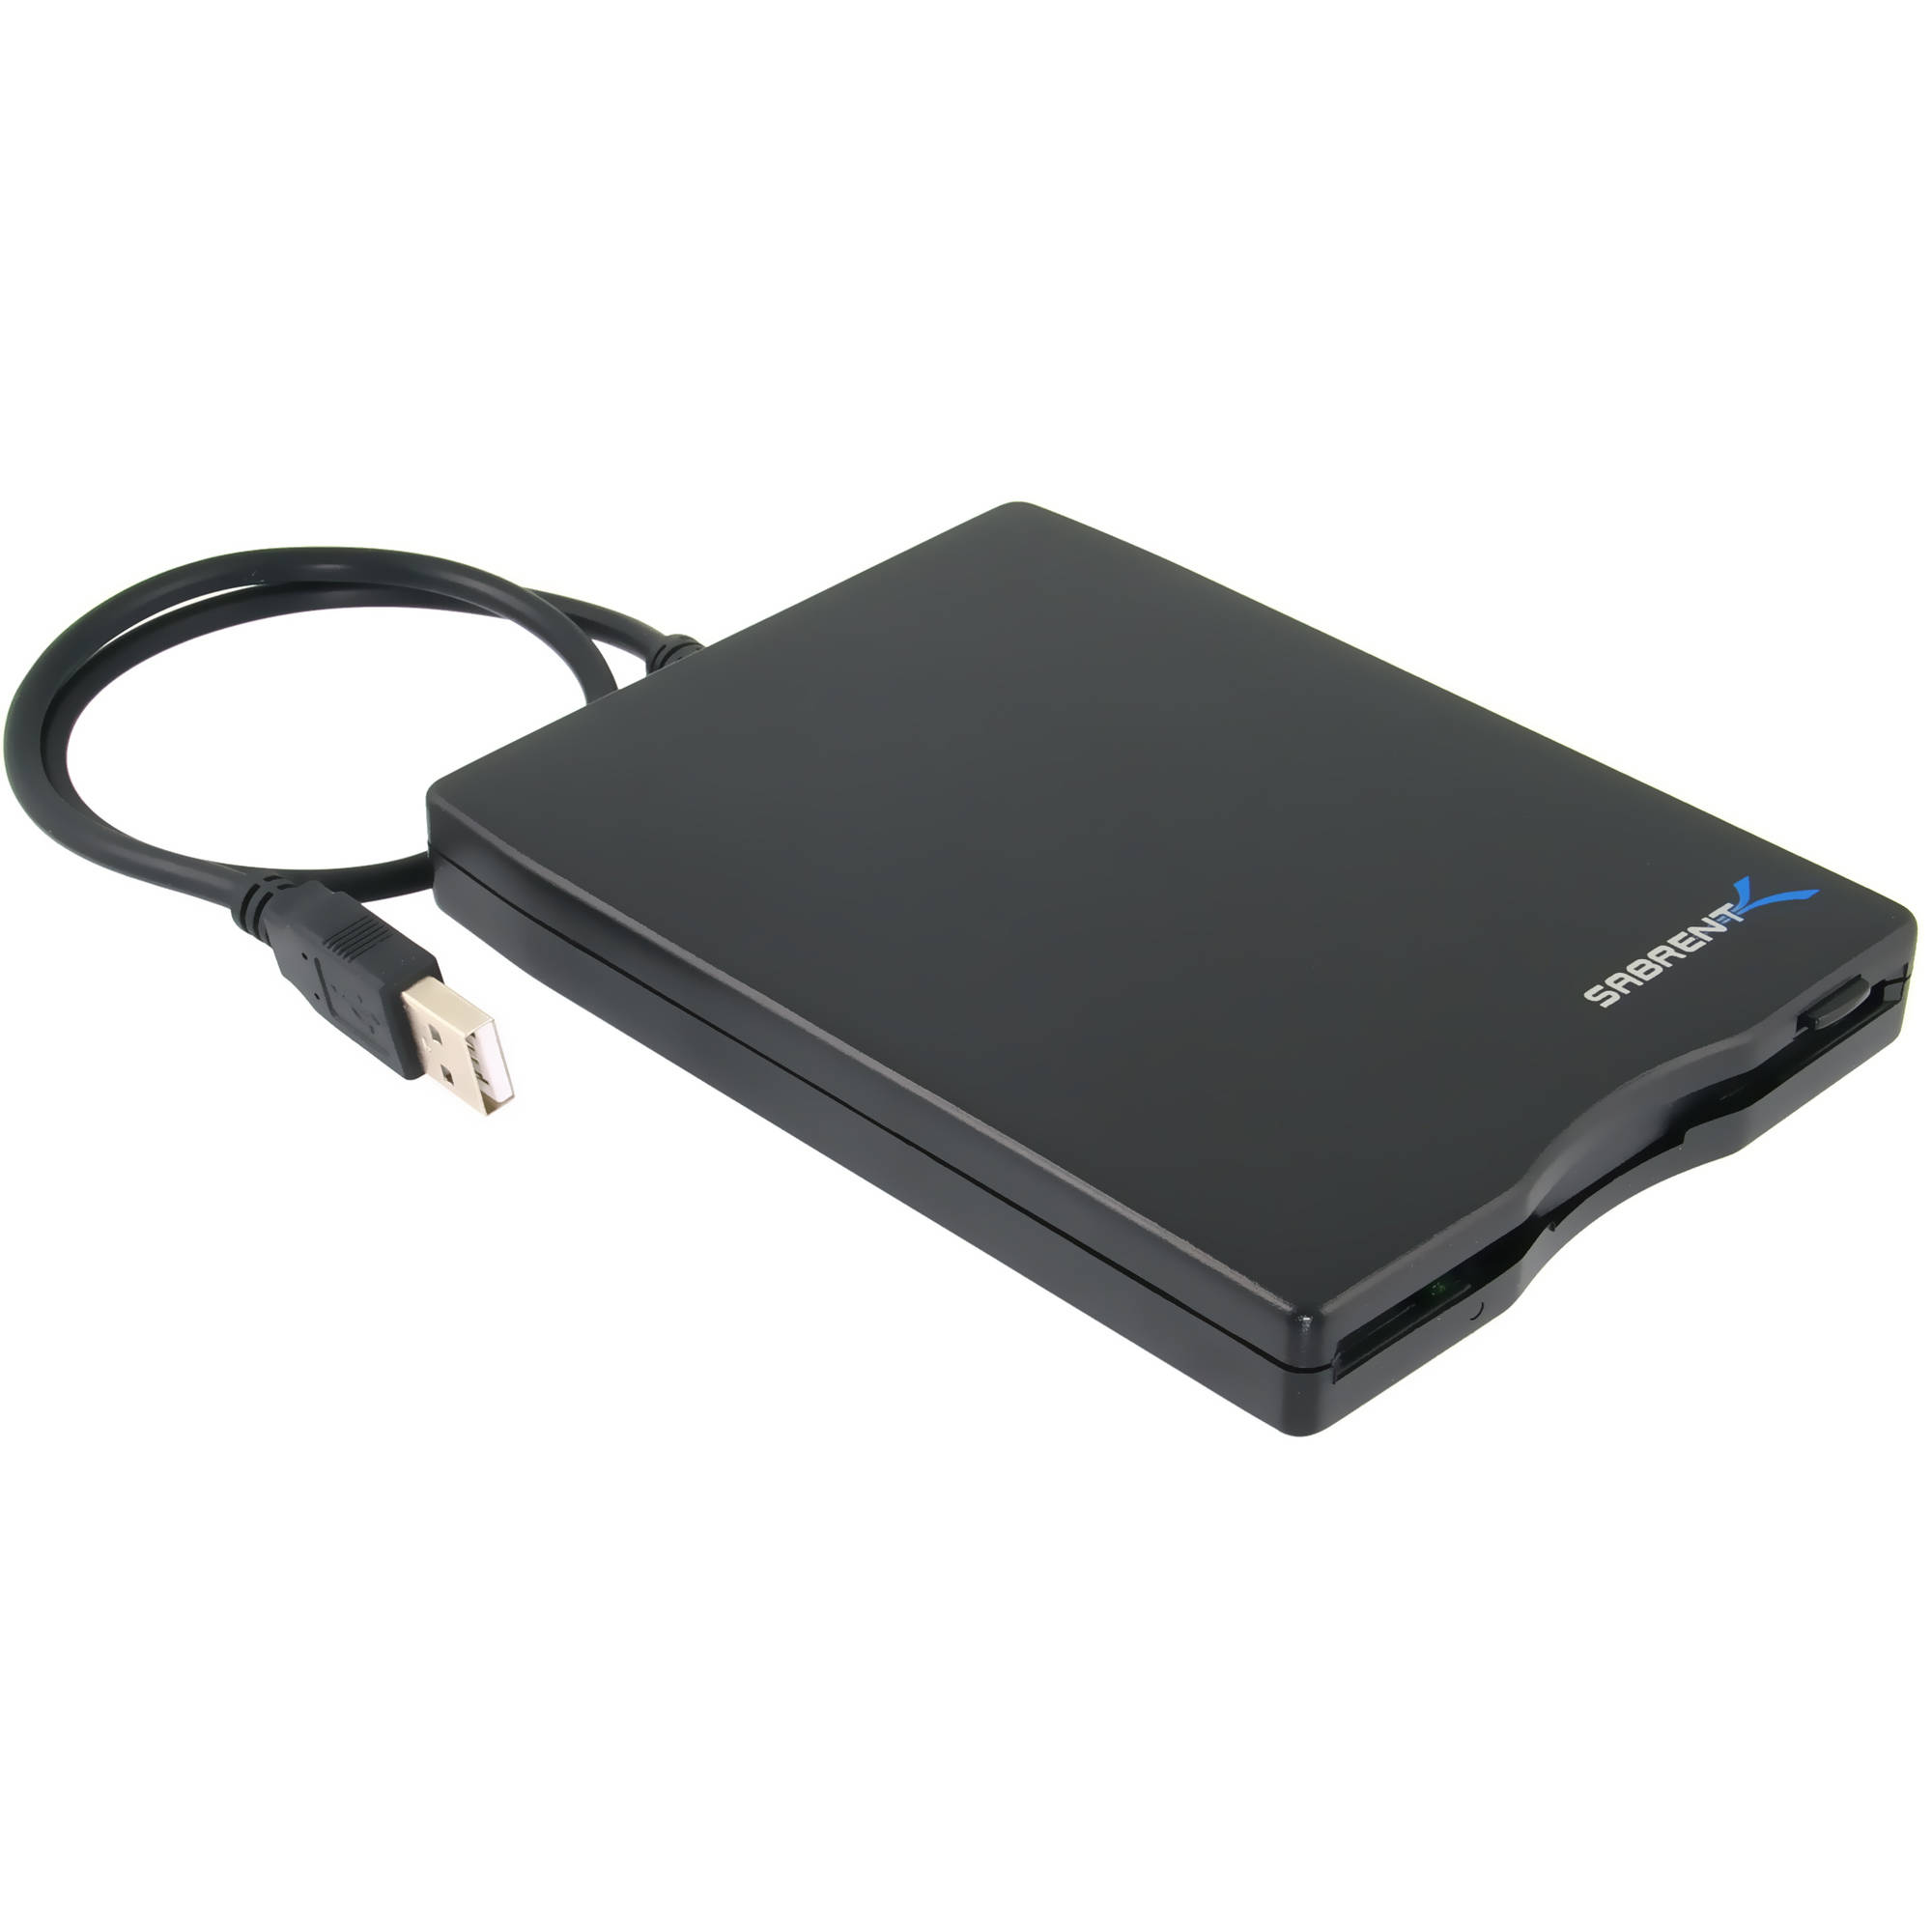 Sabrent USB 1.44MB FLOPPY DRIVE PORTABLE BLACK - image 4 of 5